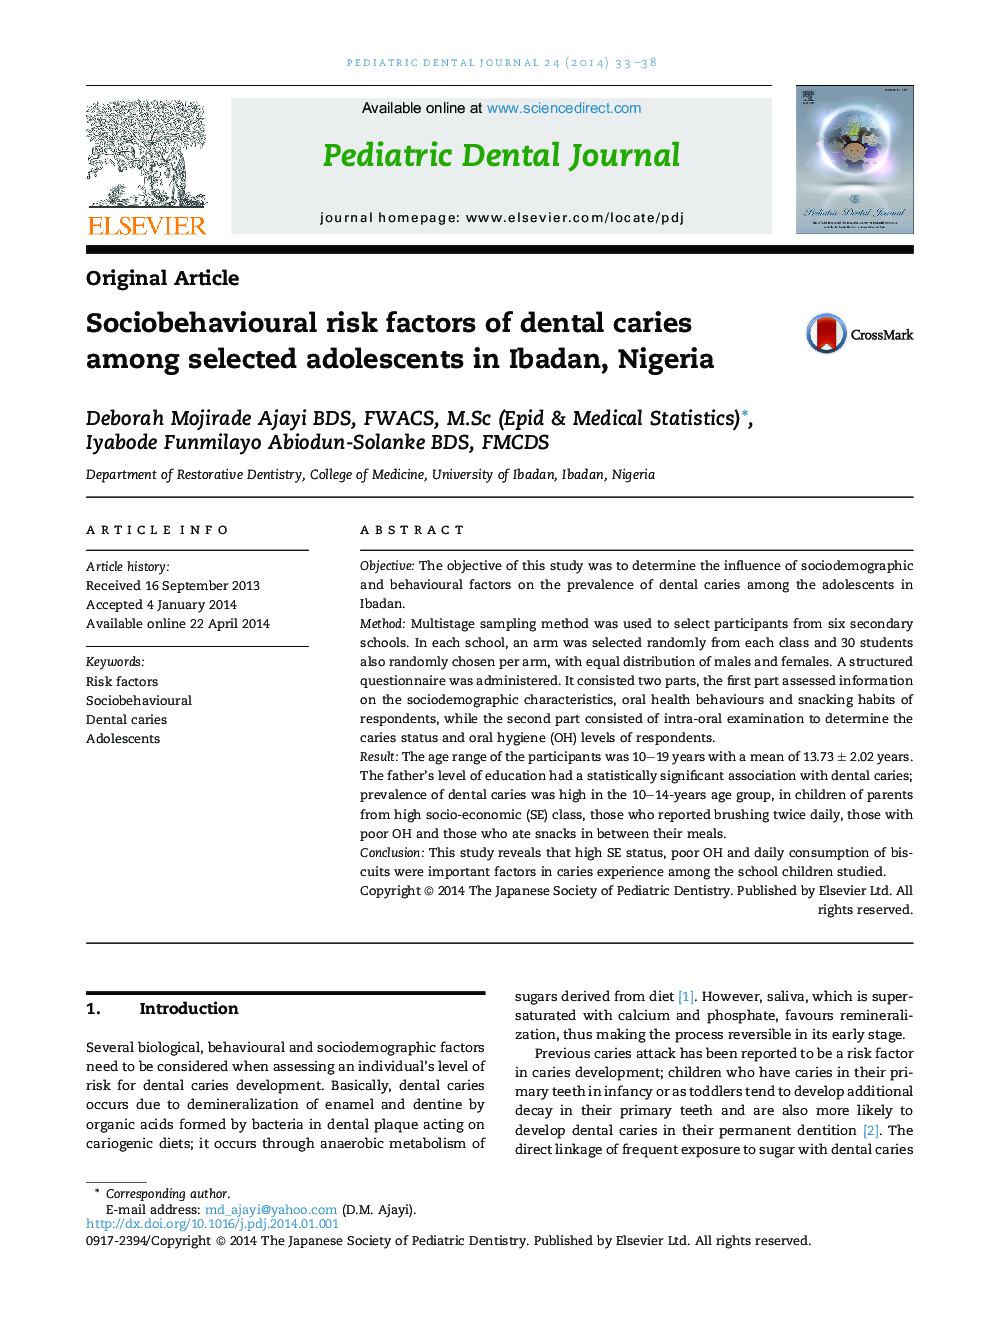 Sociobehavioural risk factors of dental caries among selected adolescents in Ibadan, Nigeria